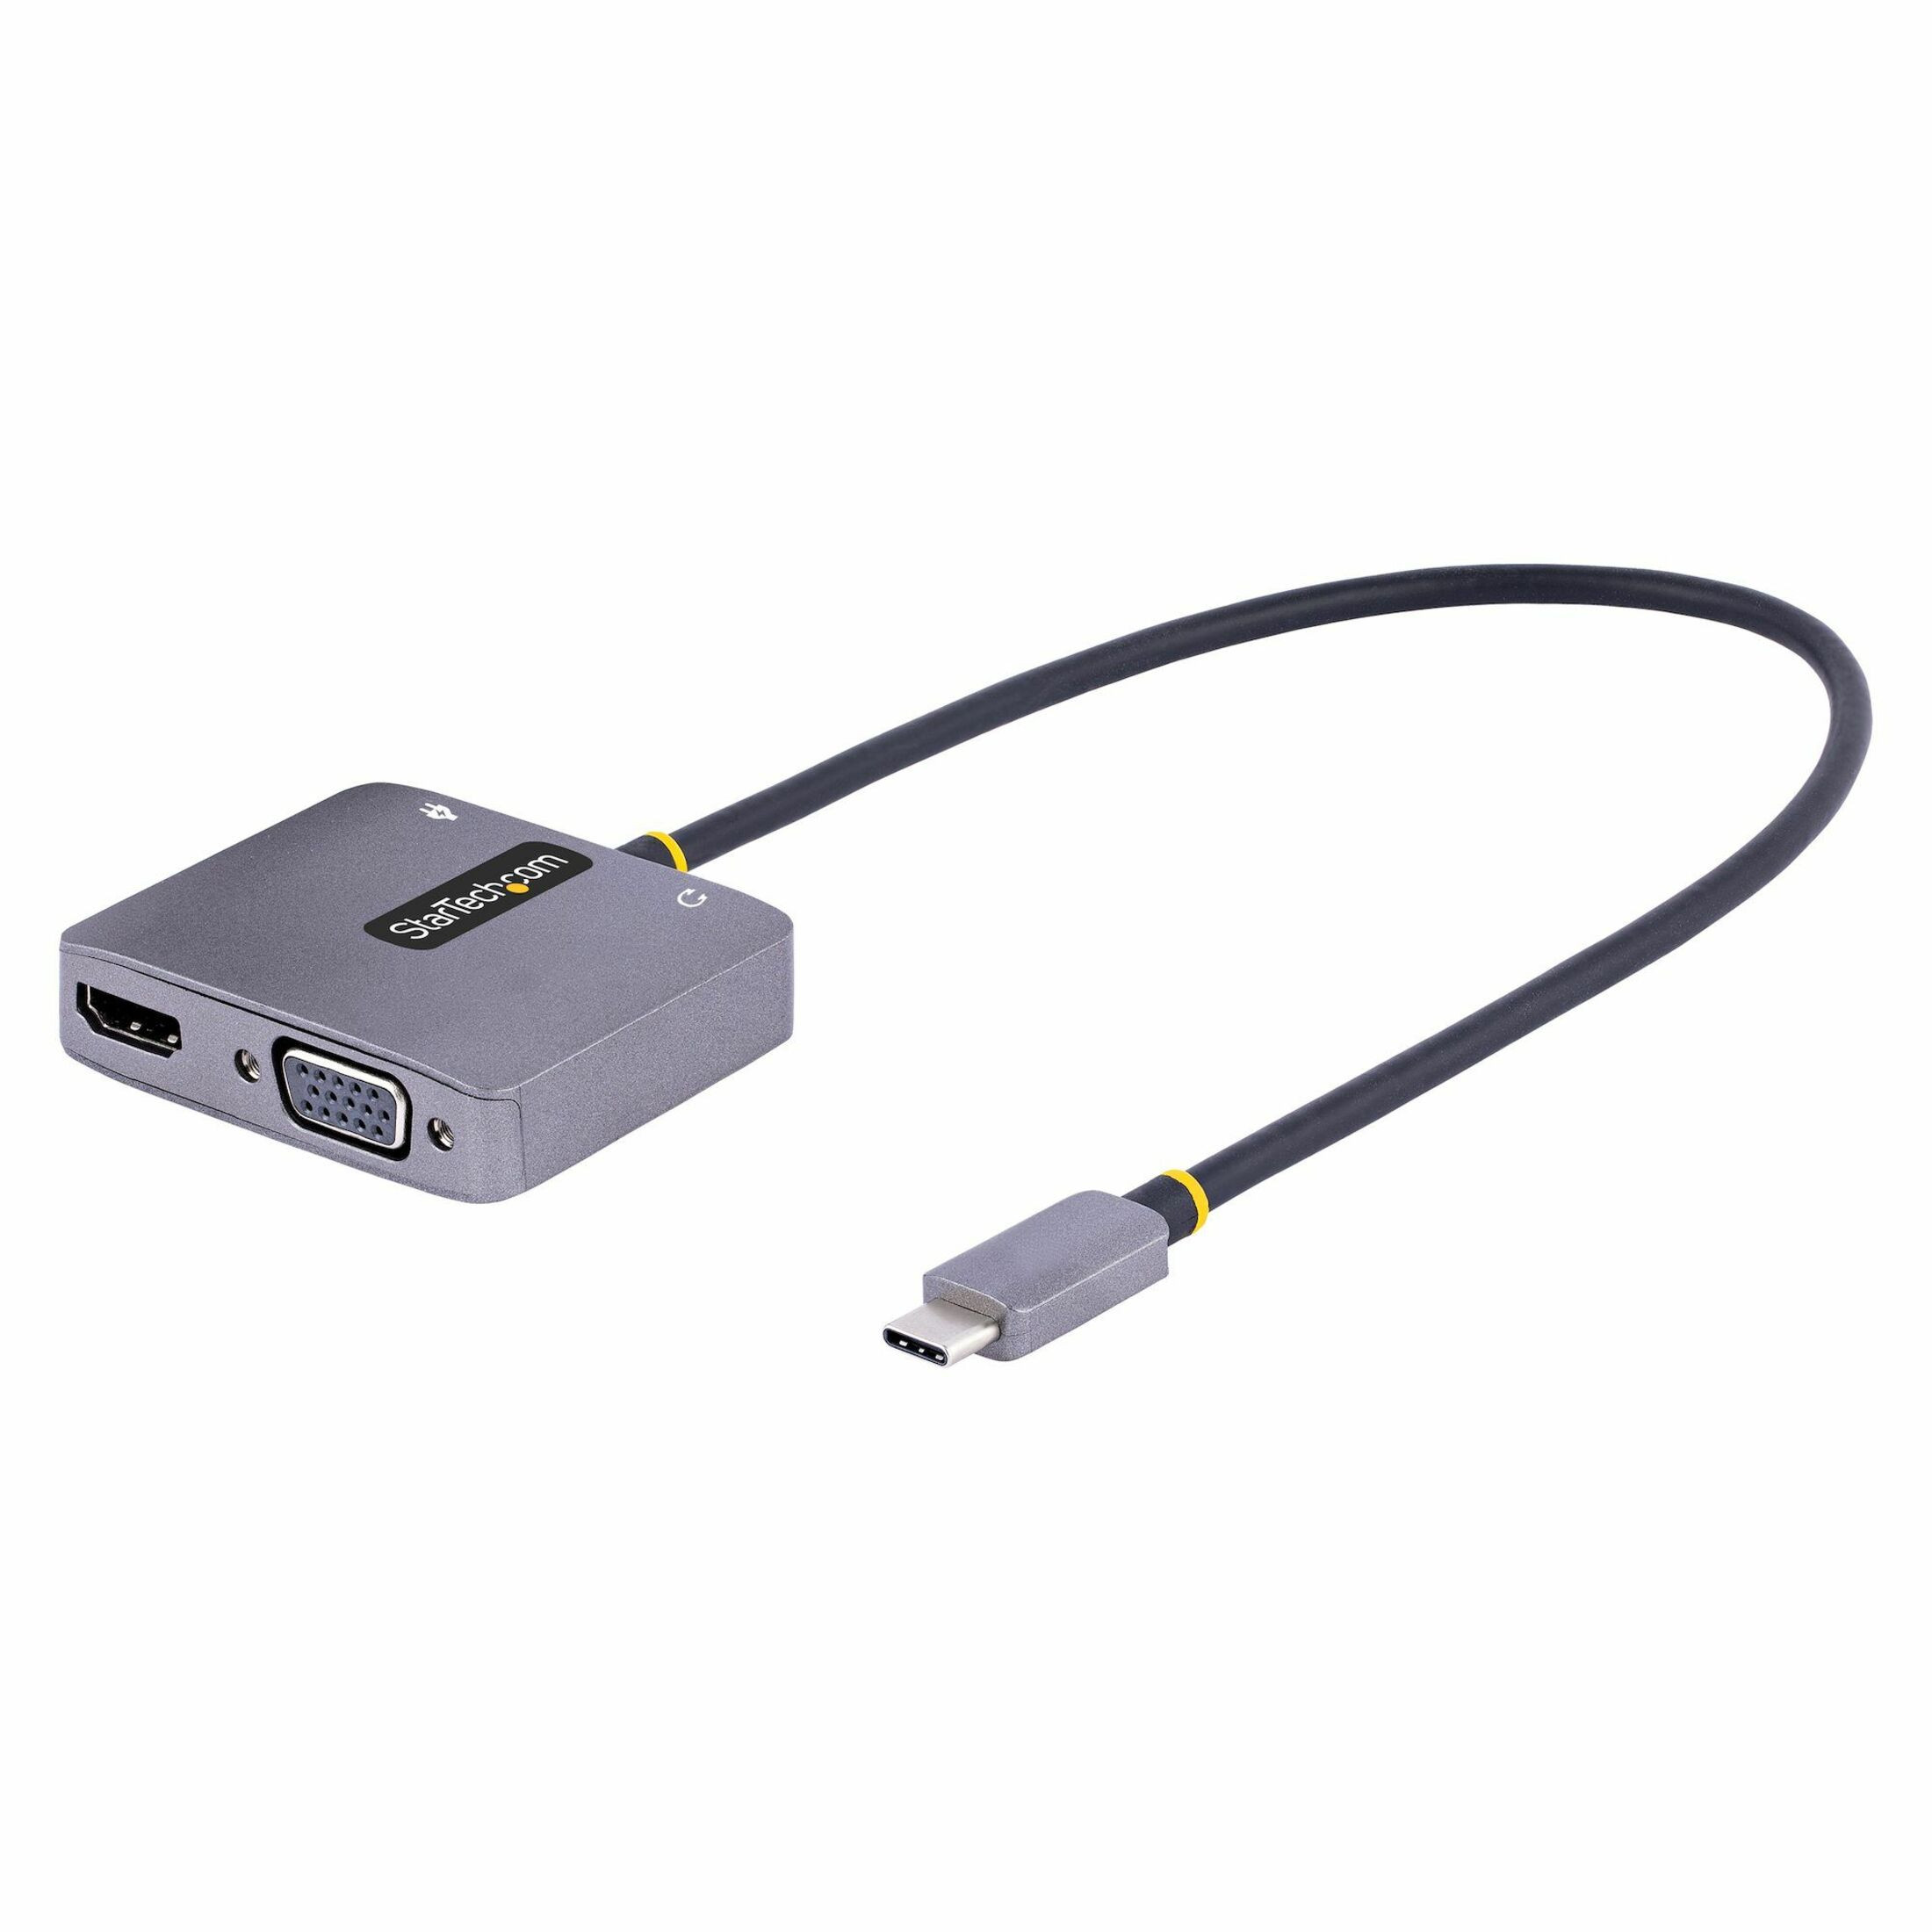 Startech .com USB C Video Adapter, USB C to HDMI VGA Adapter, 3.5mm Audio Output, 4K 60Hz HDR, 100W PD USB C Display... 122-USBC-HDMI-4K-VGA - Armor